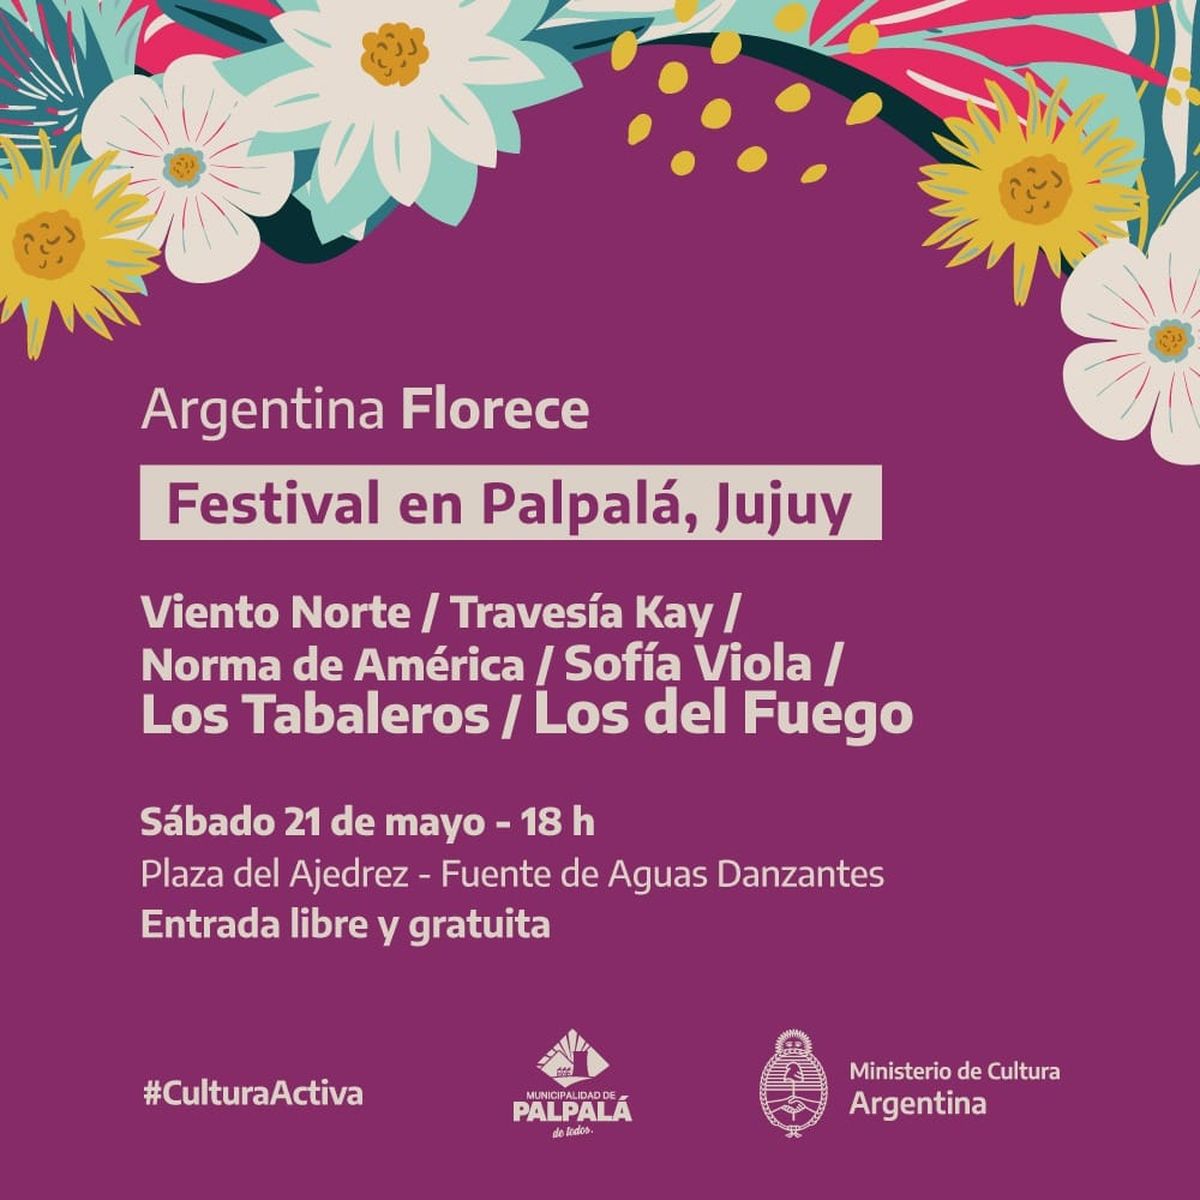 El Festival nacional Argentina Florece llega a Palpalá